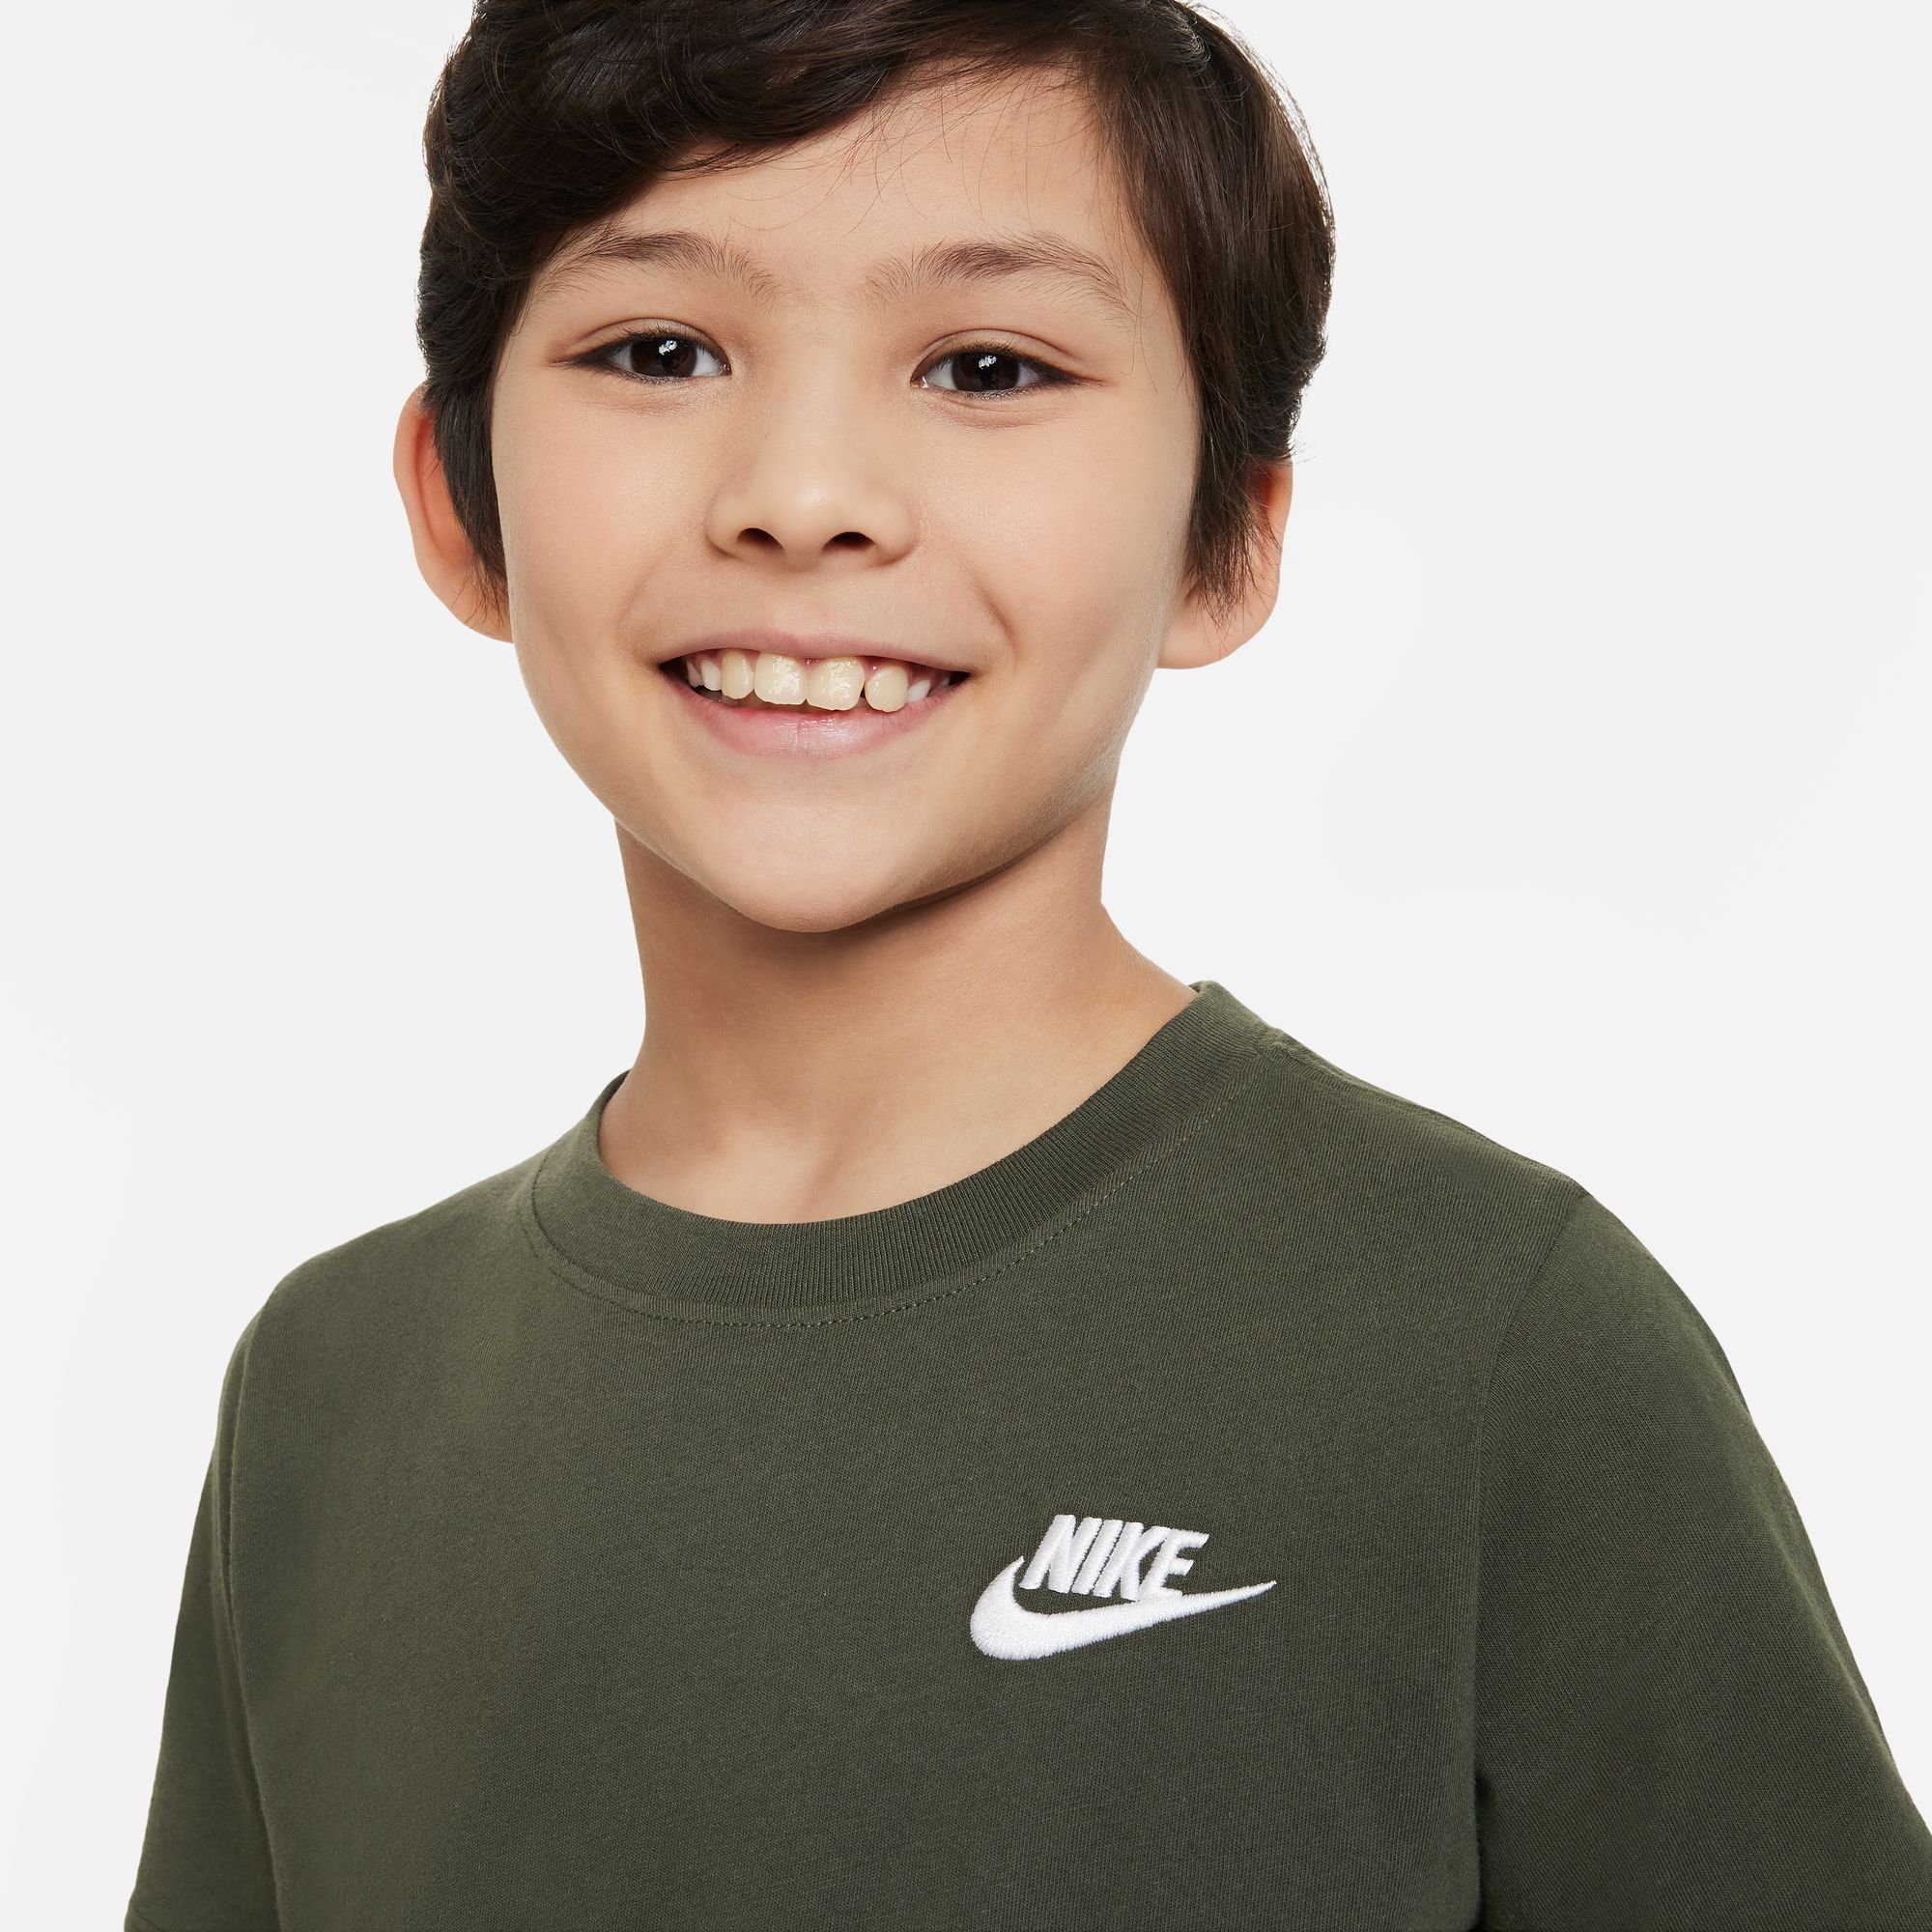 KIDS' CARGO T-Shirt BIG T-SHIRT KHAKI/WHITE Sportswear Nike